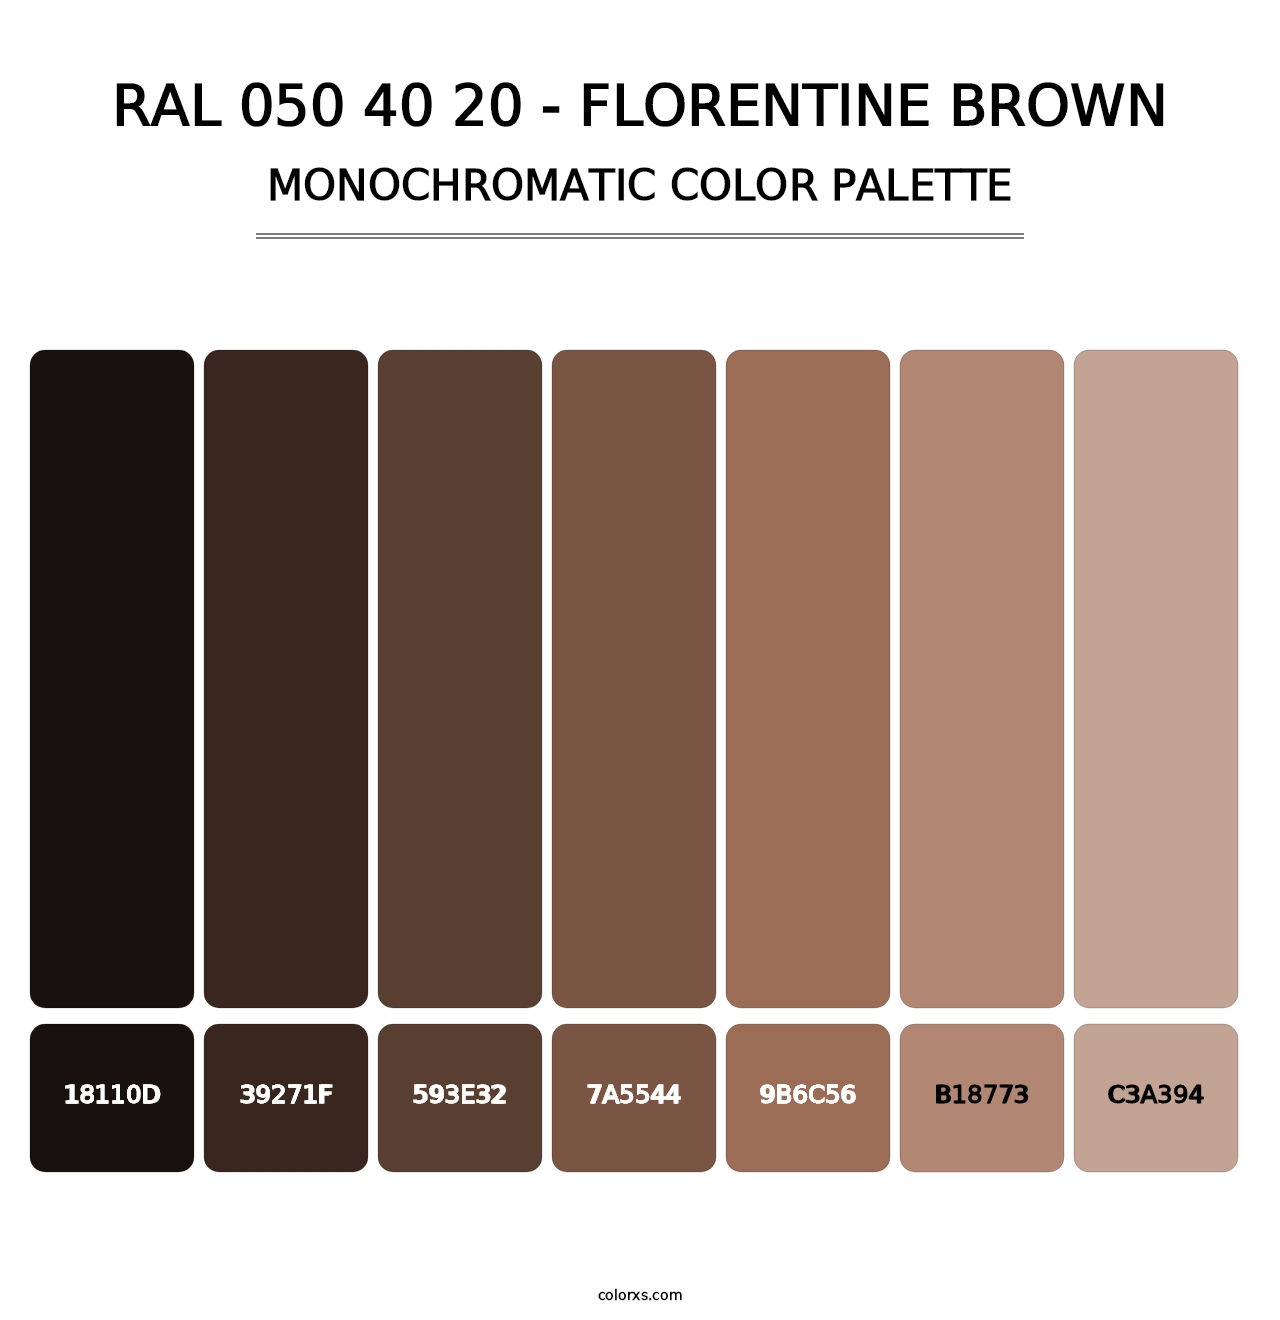 RAL 050 40 20 - Florentine Brown - Monochromatic Color Palette